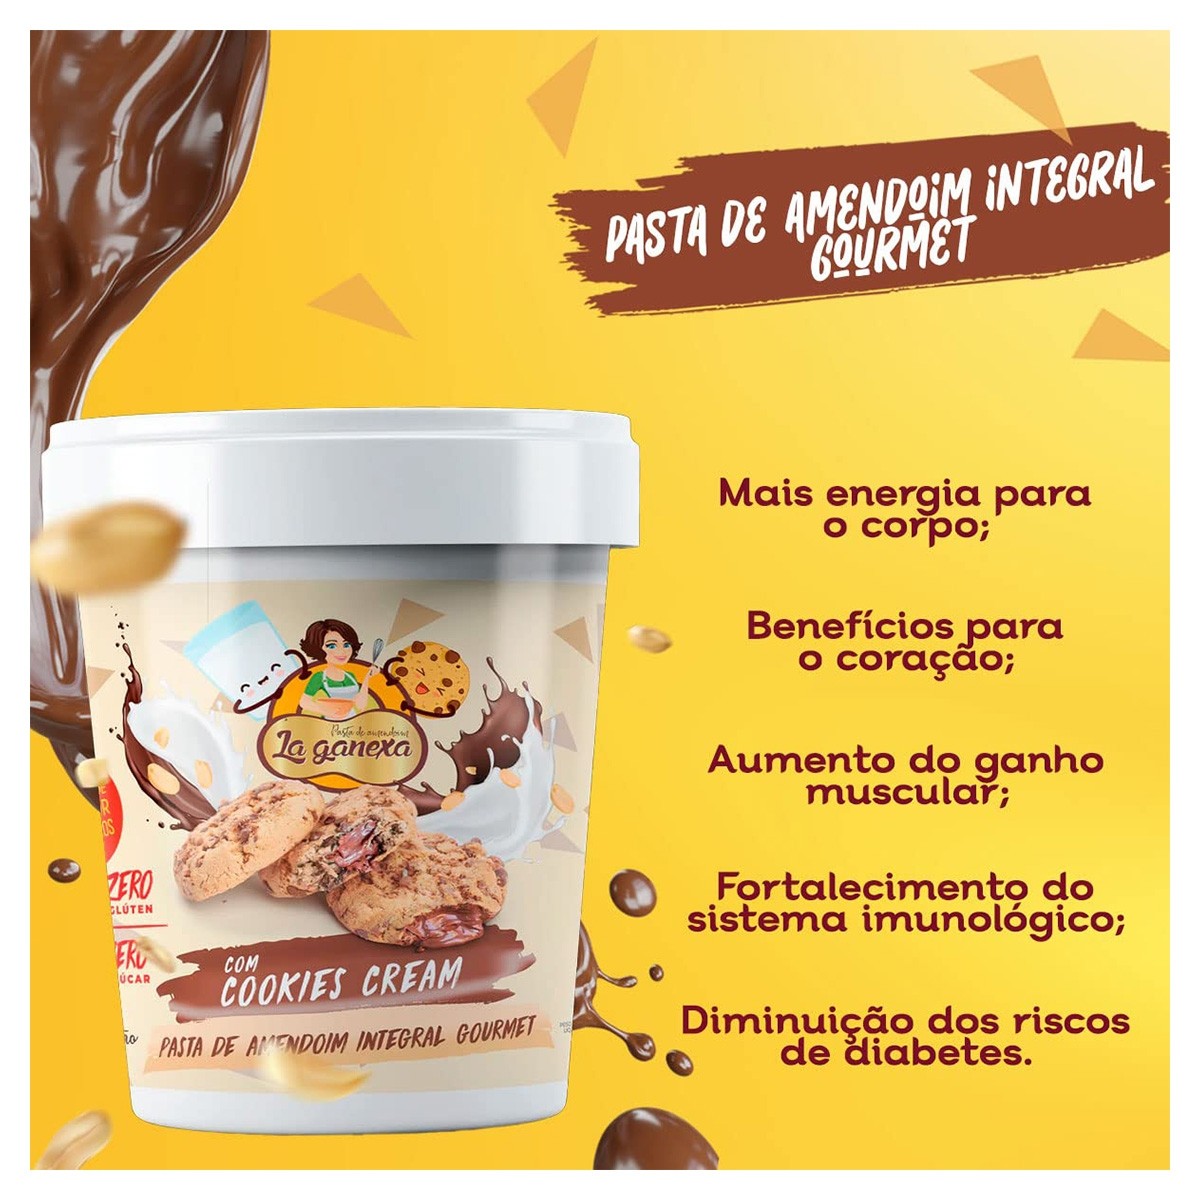 https://www.drogariaminasbrasil.com.br/media/product/53a/pasta-de-amendoim-integral-com-cookies-cream-450g-la-ganexa-75e.jpg